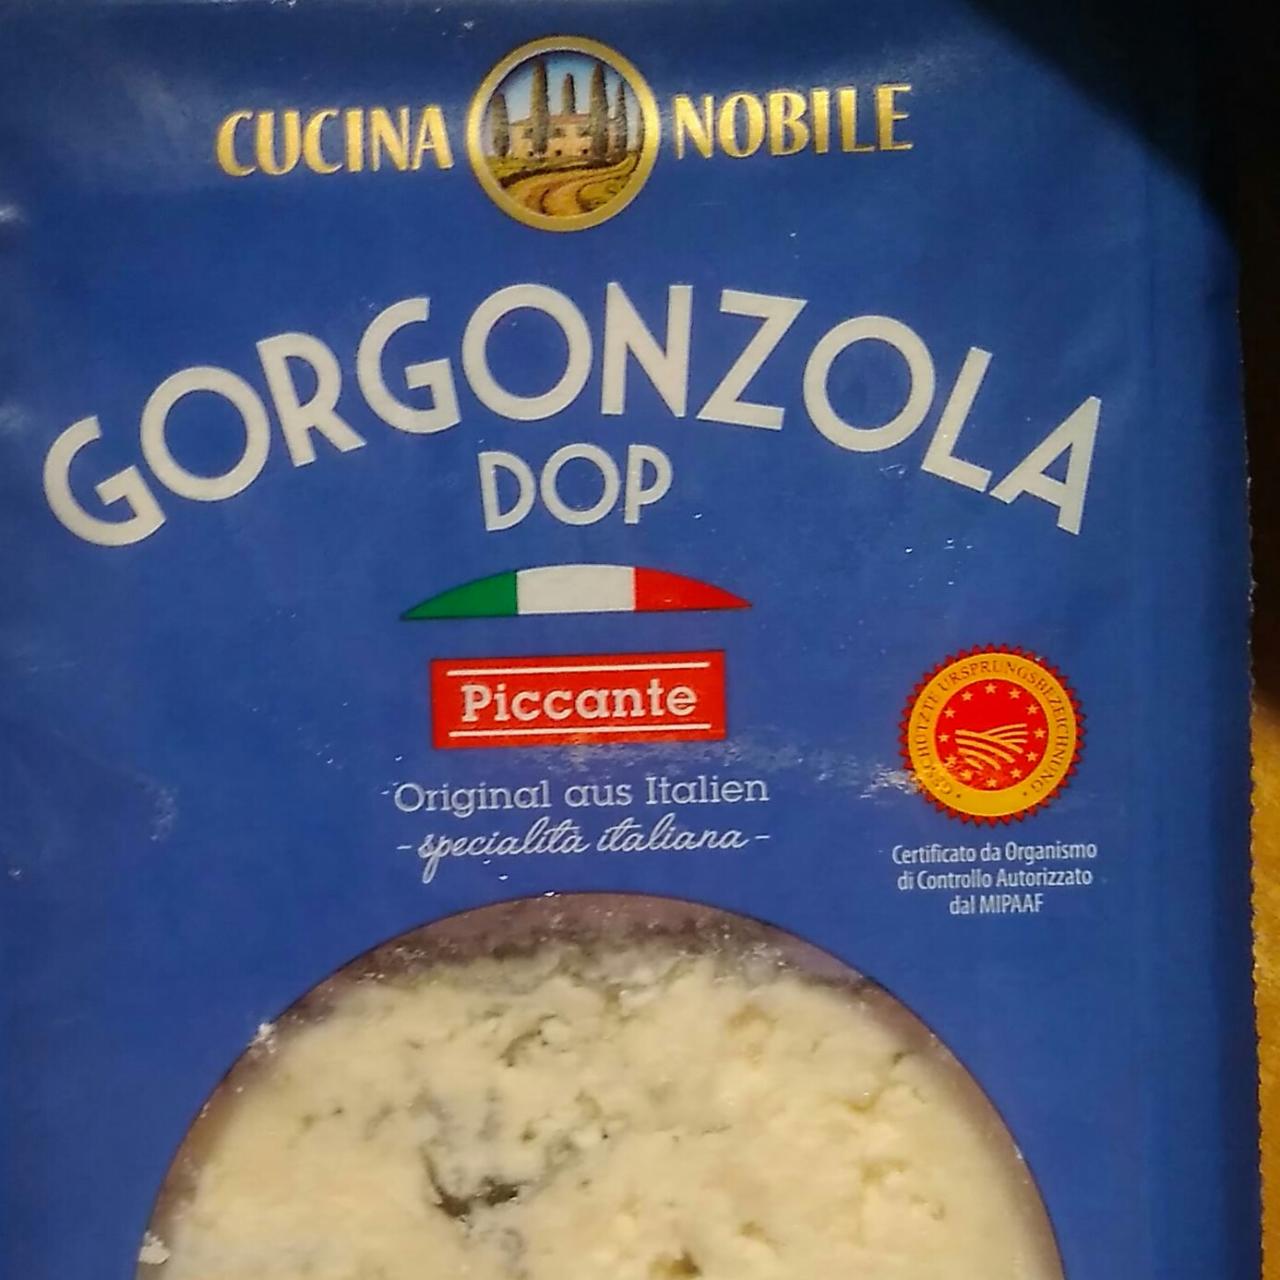 Fotografie - Gorgonzola DOP Piccante Cucina Nobile